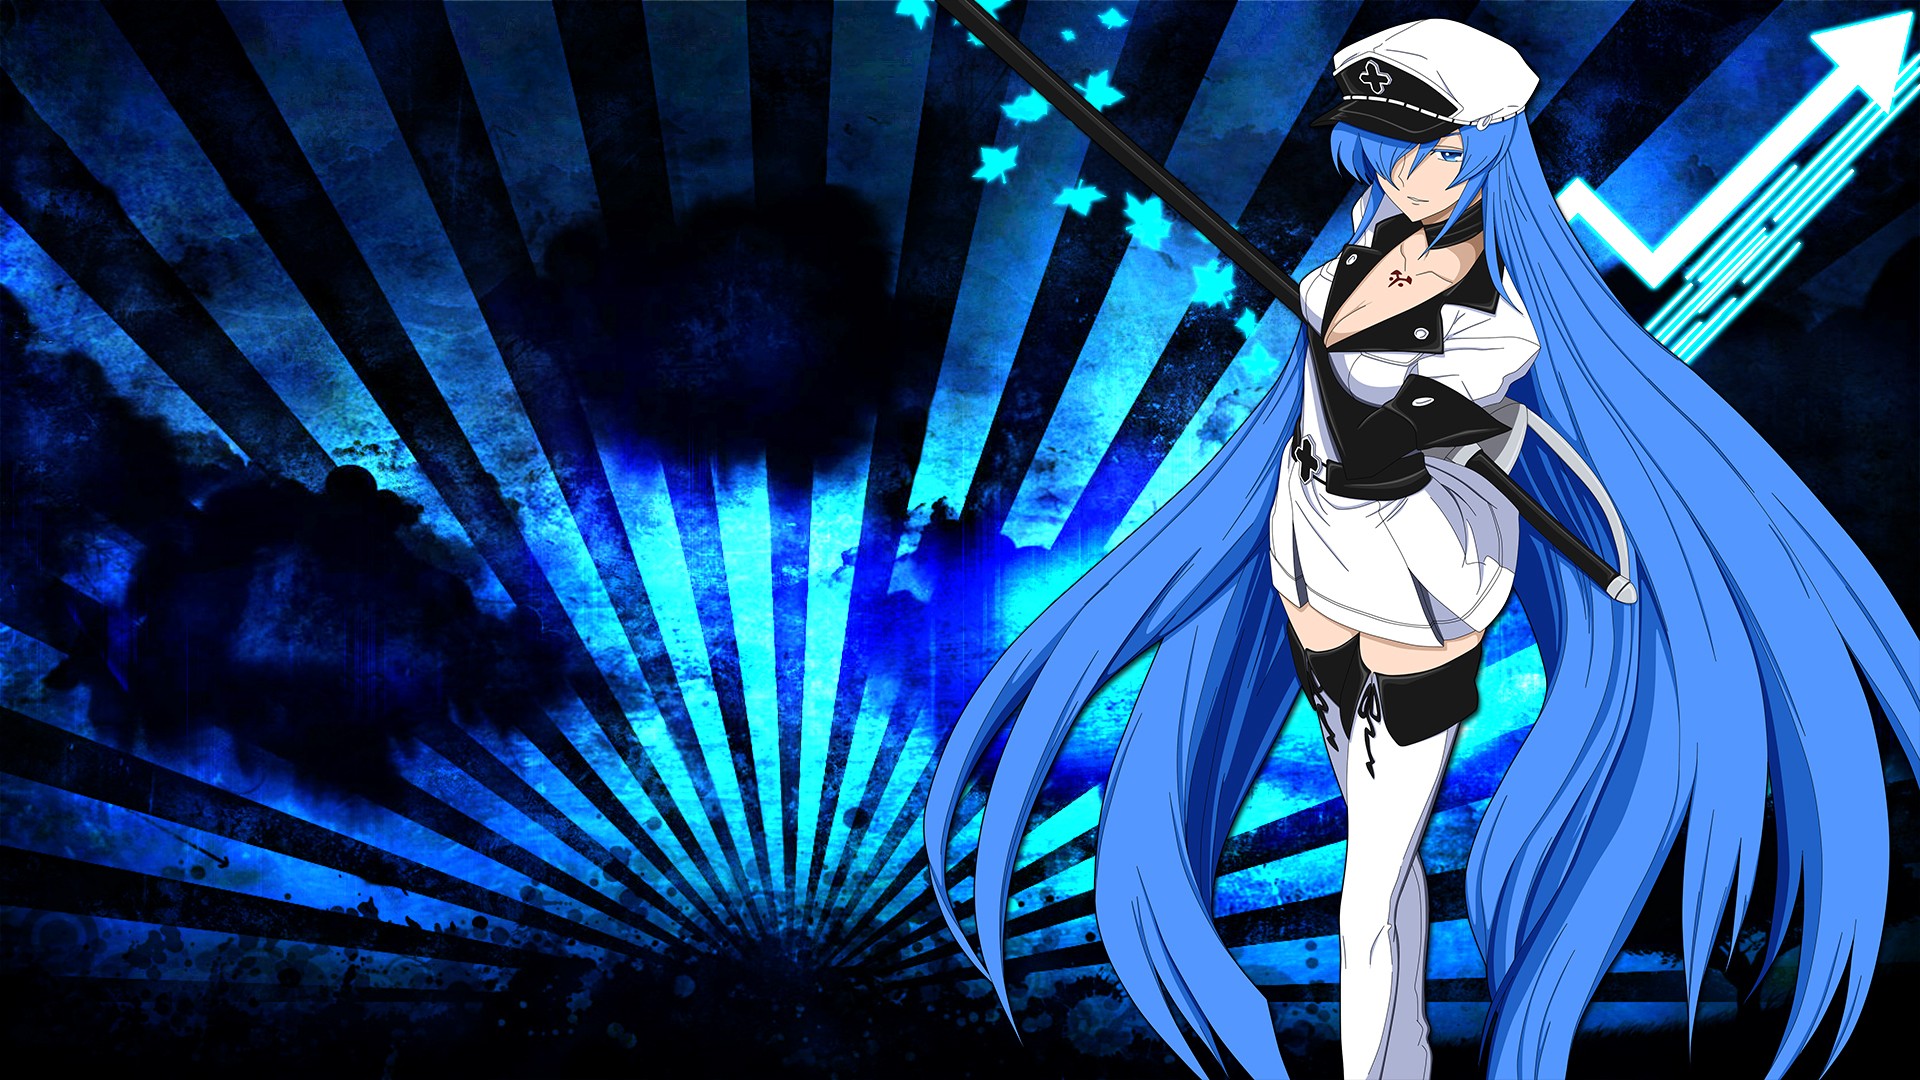 Anime 1920x1080 anime anime girls Esdeath (Akame Ga Kill!) Akame ga Kill! hat blue hair cleavage stockings blue background long hair women with hats